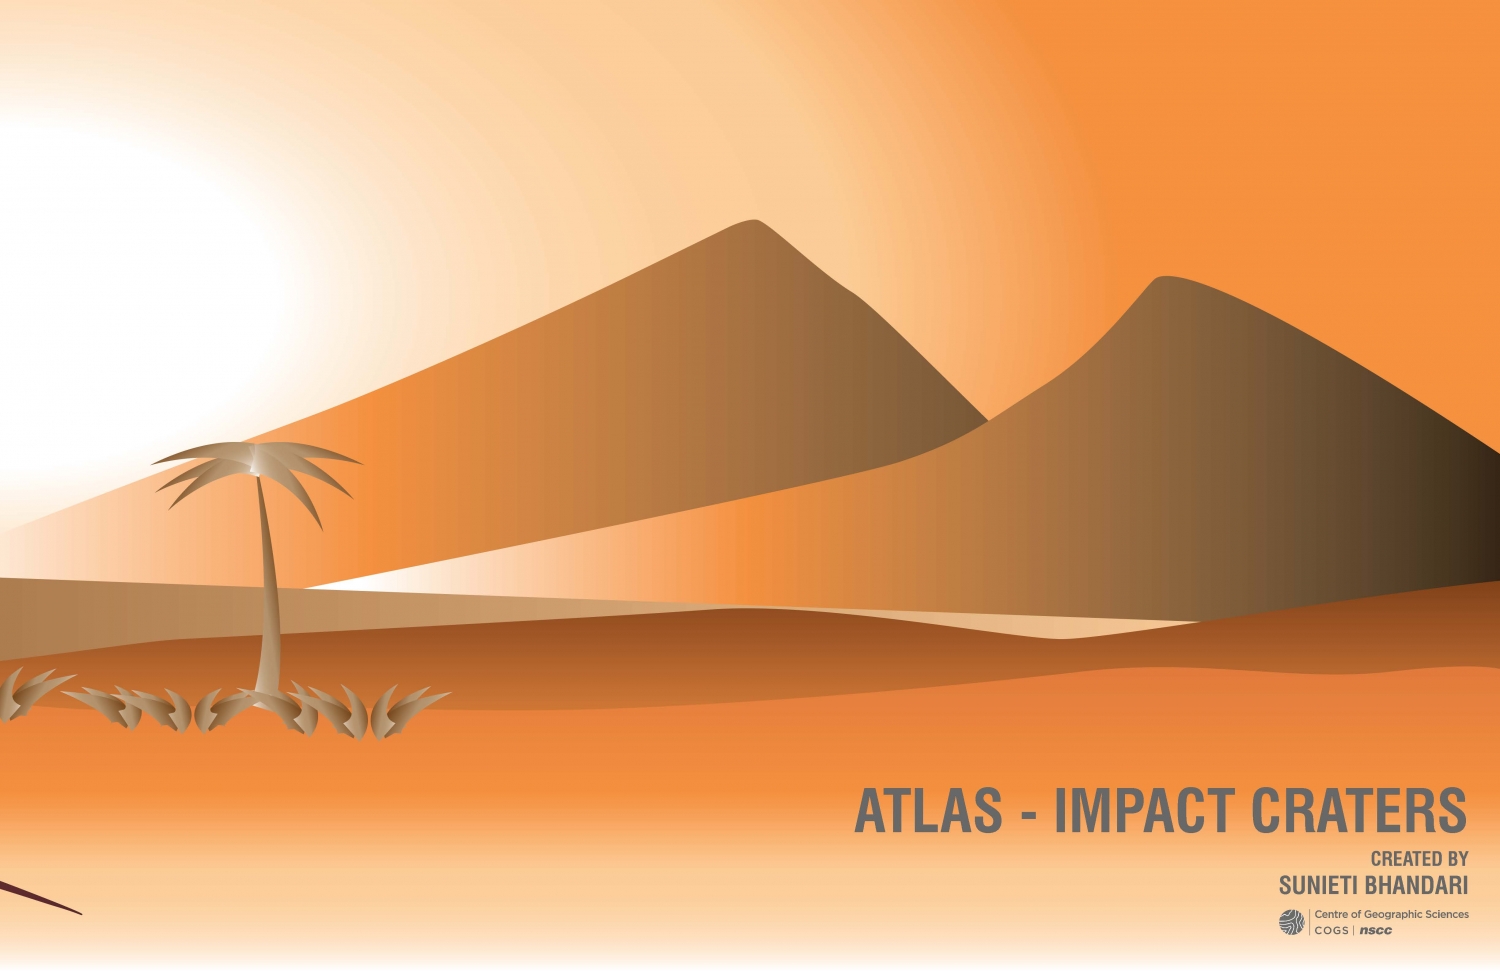 Sunieti Bhandari - Atlas - Impact Craters